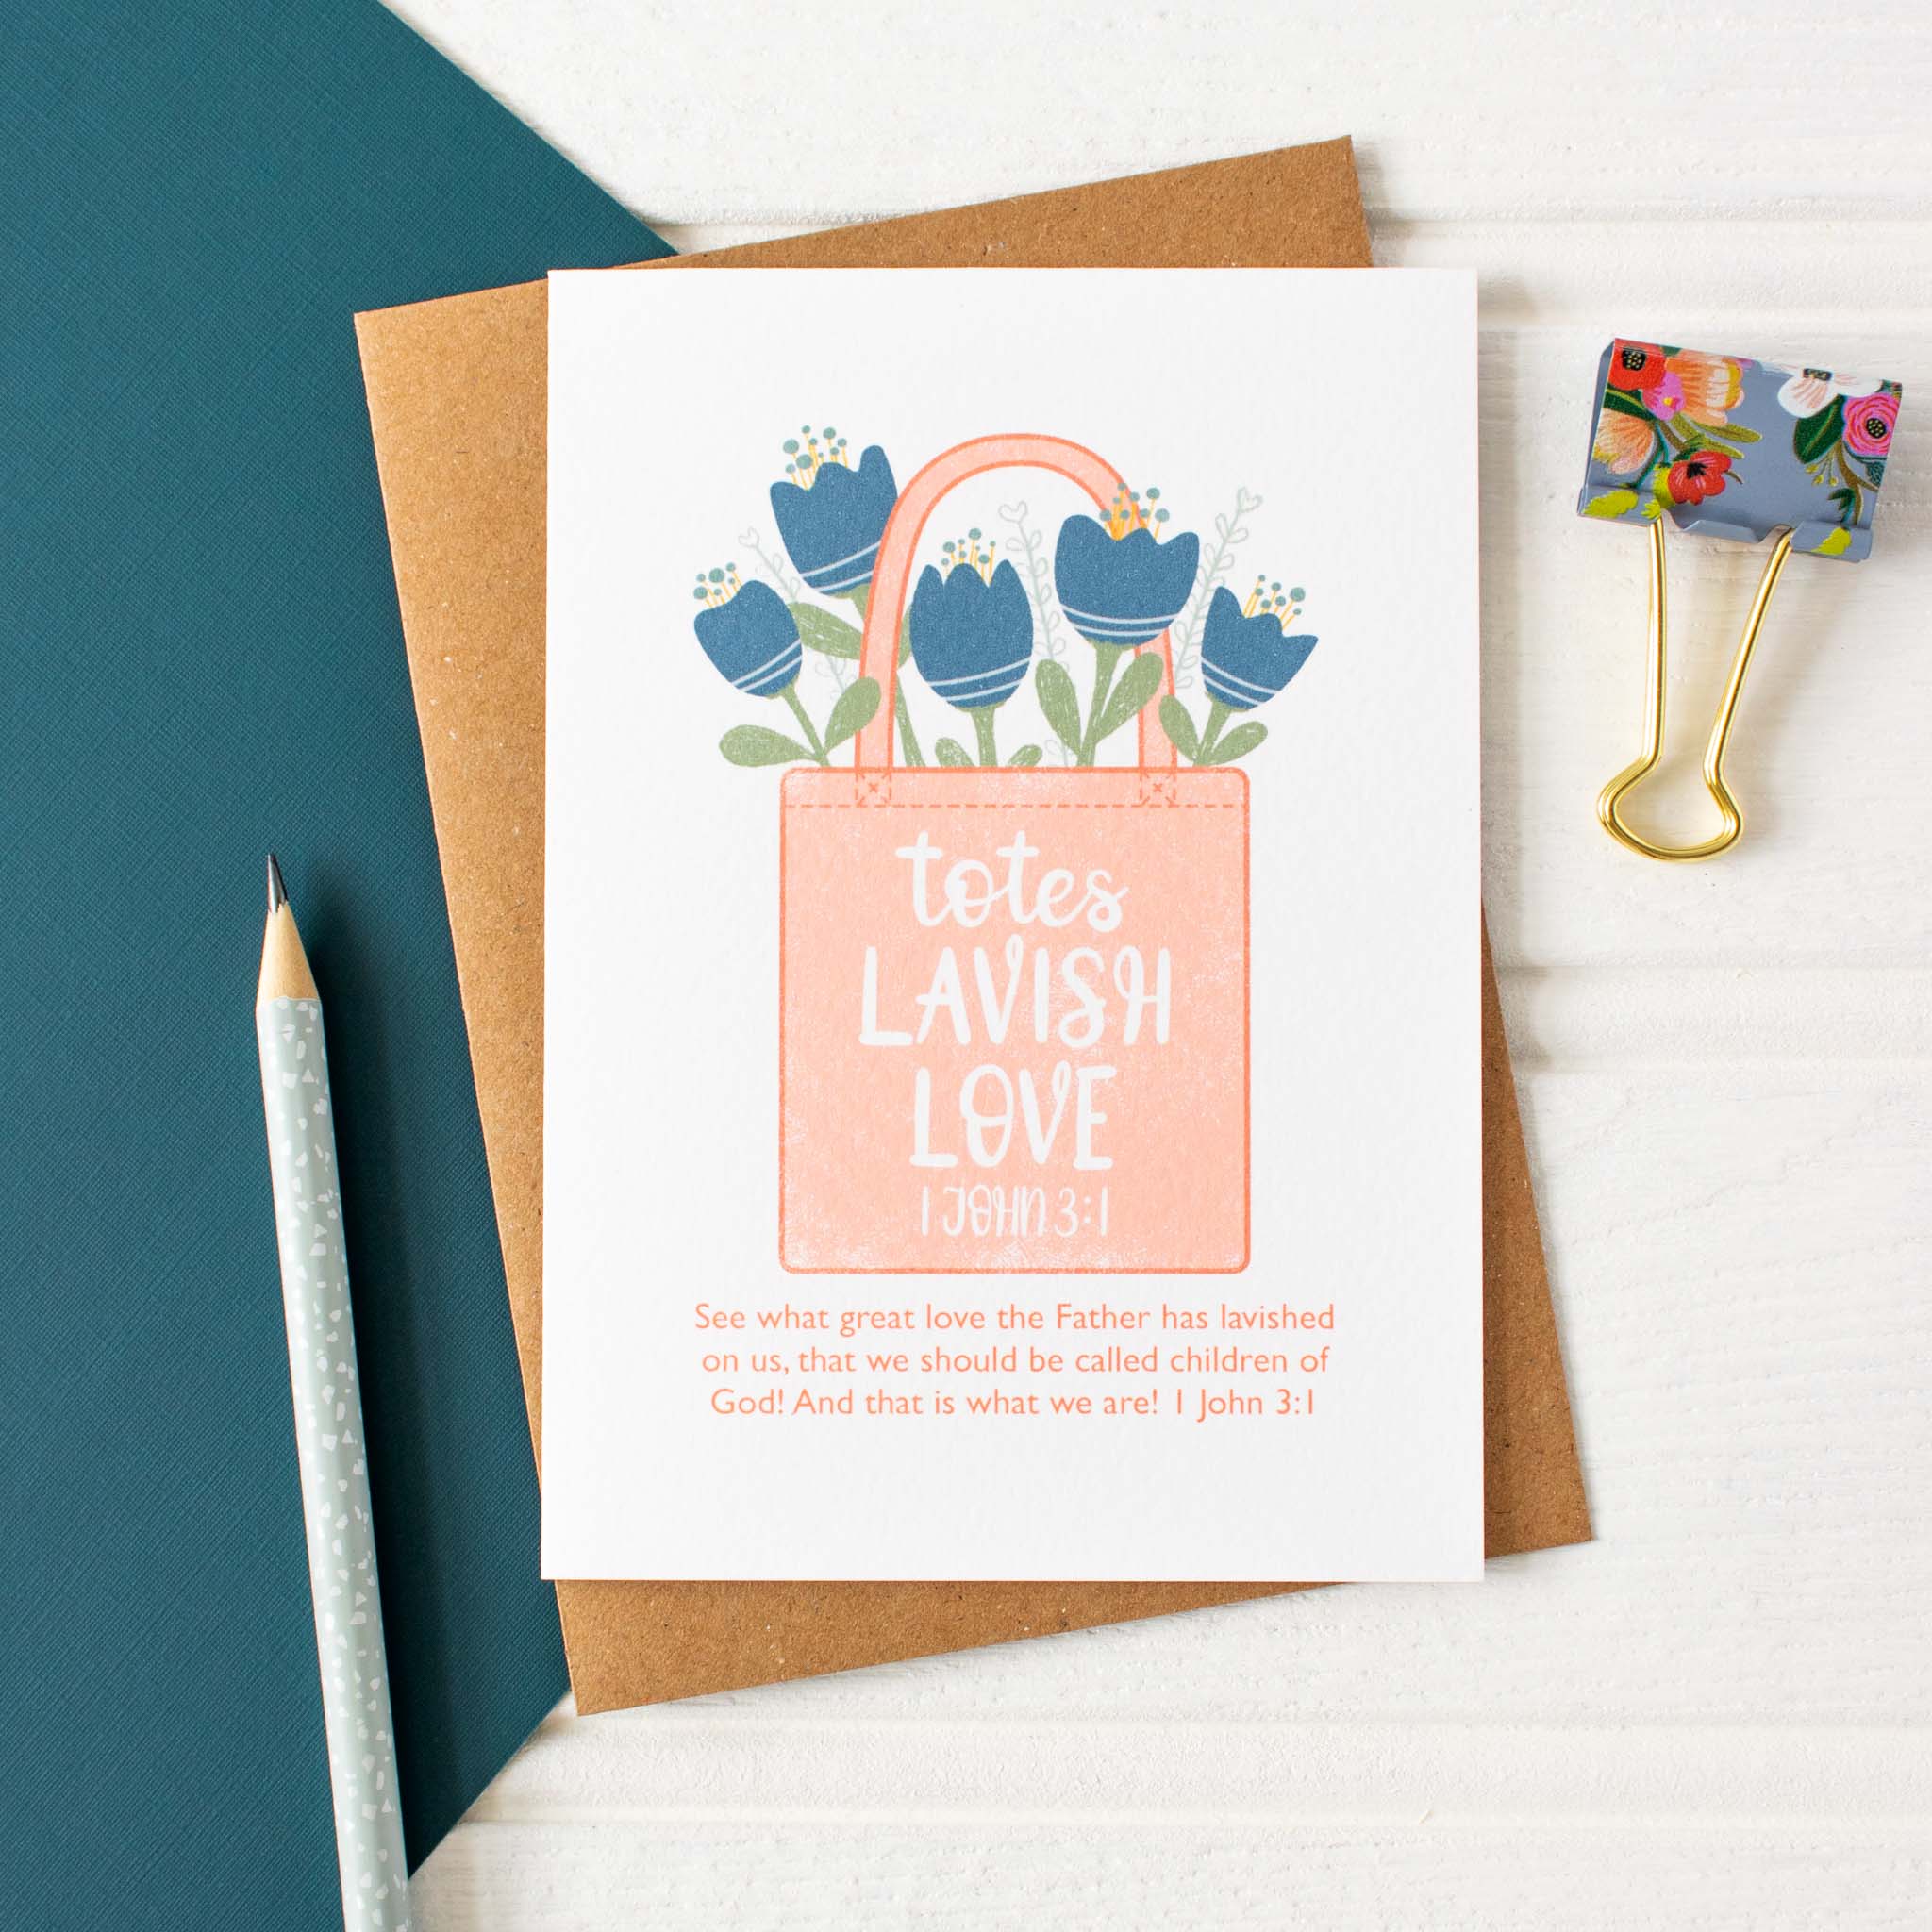 Totes Lavish Love Card with kraft envelope